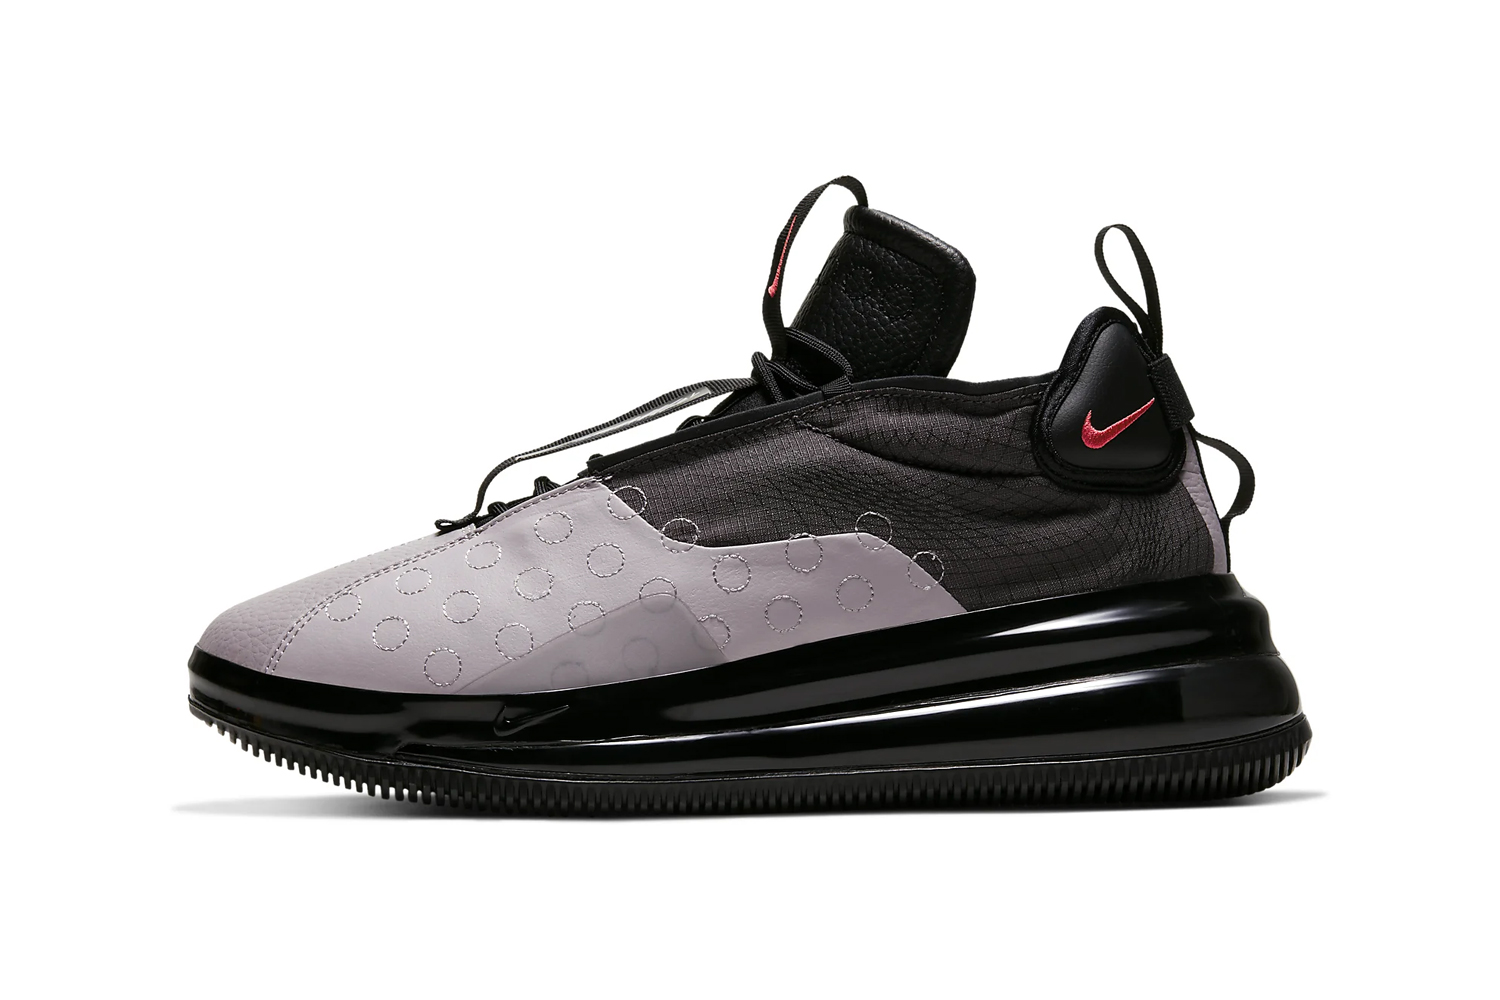 Nike D/MS/X Air Max 720 Waves Silver Lilac/Thunder Grey BQ4430-001 sneakers kicks footwear shoes style air max 